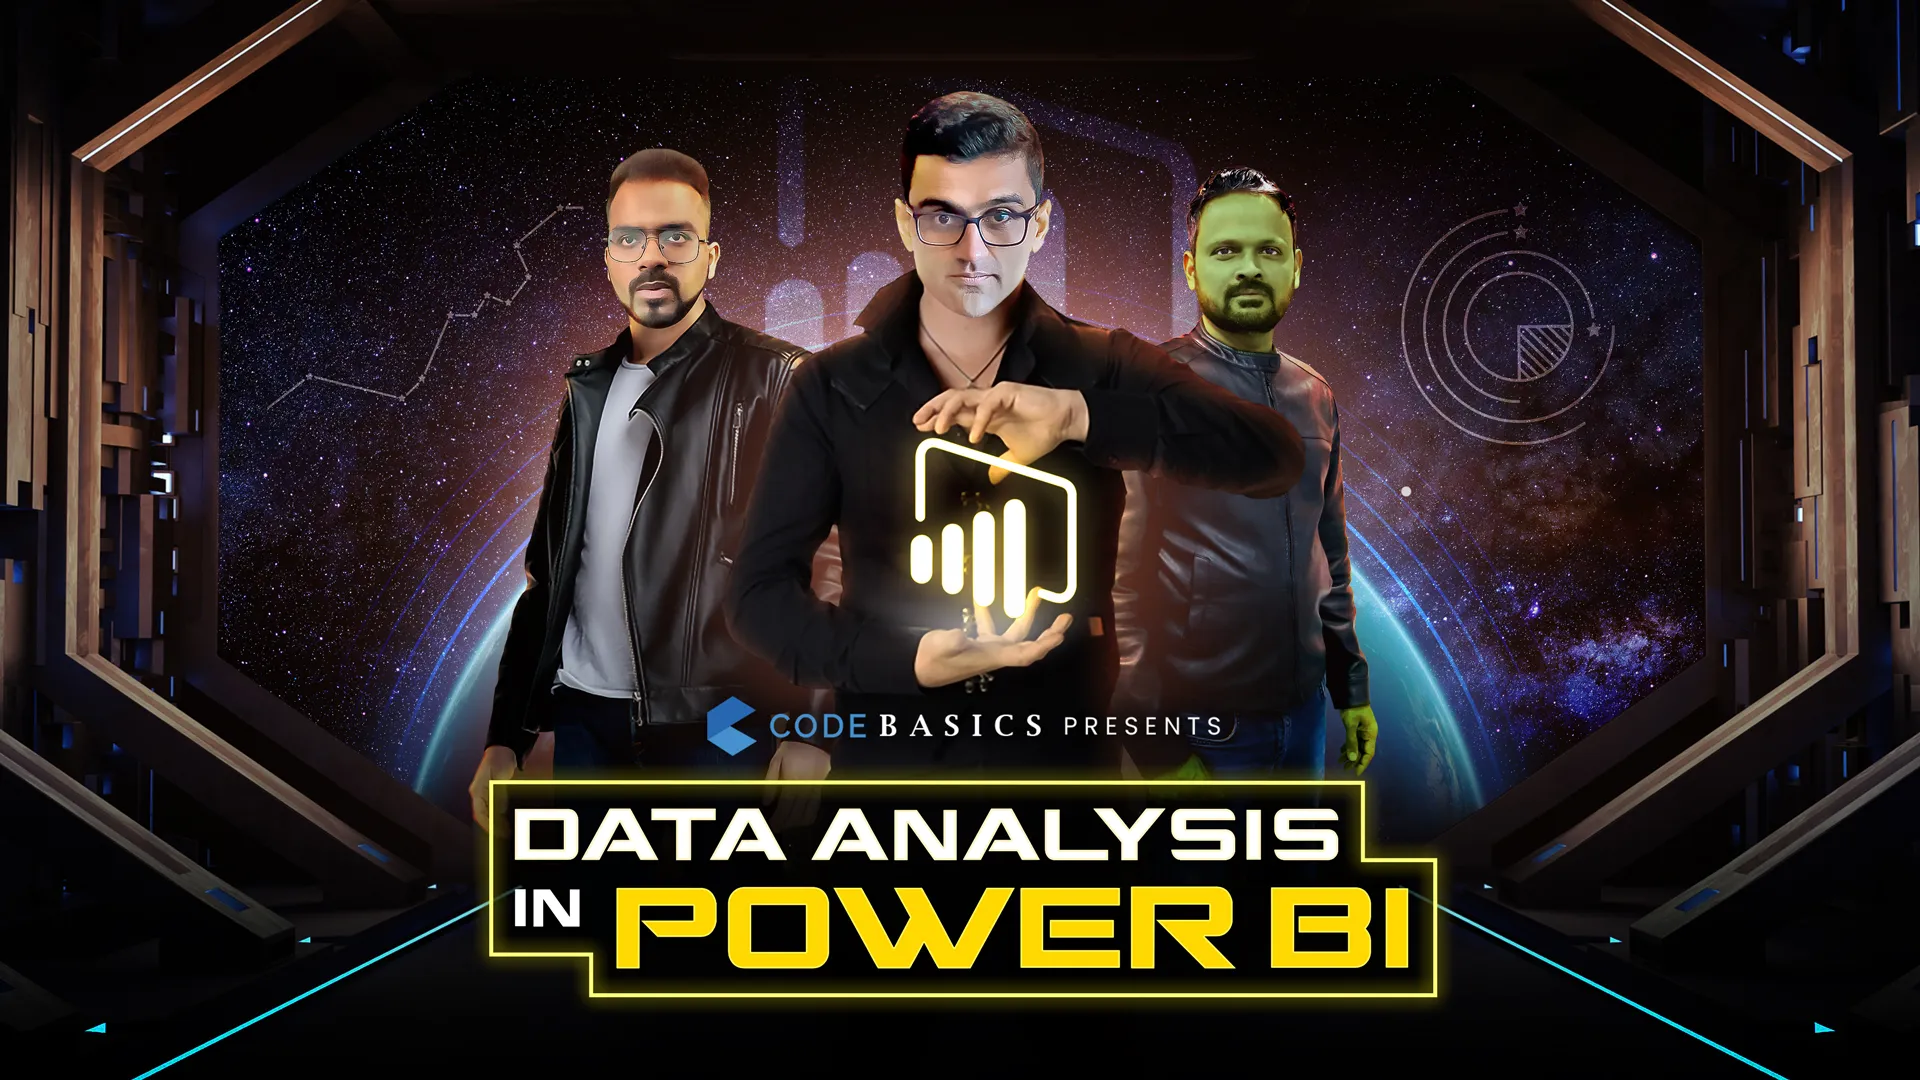 Get Job Ready: Power BI Data Analytics for All Levels